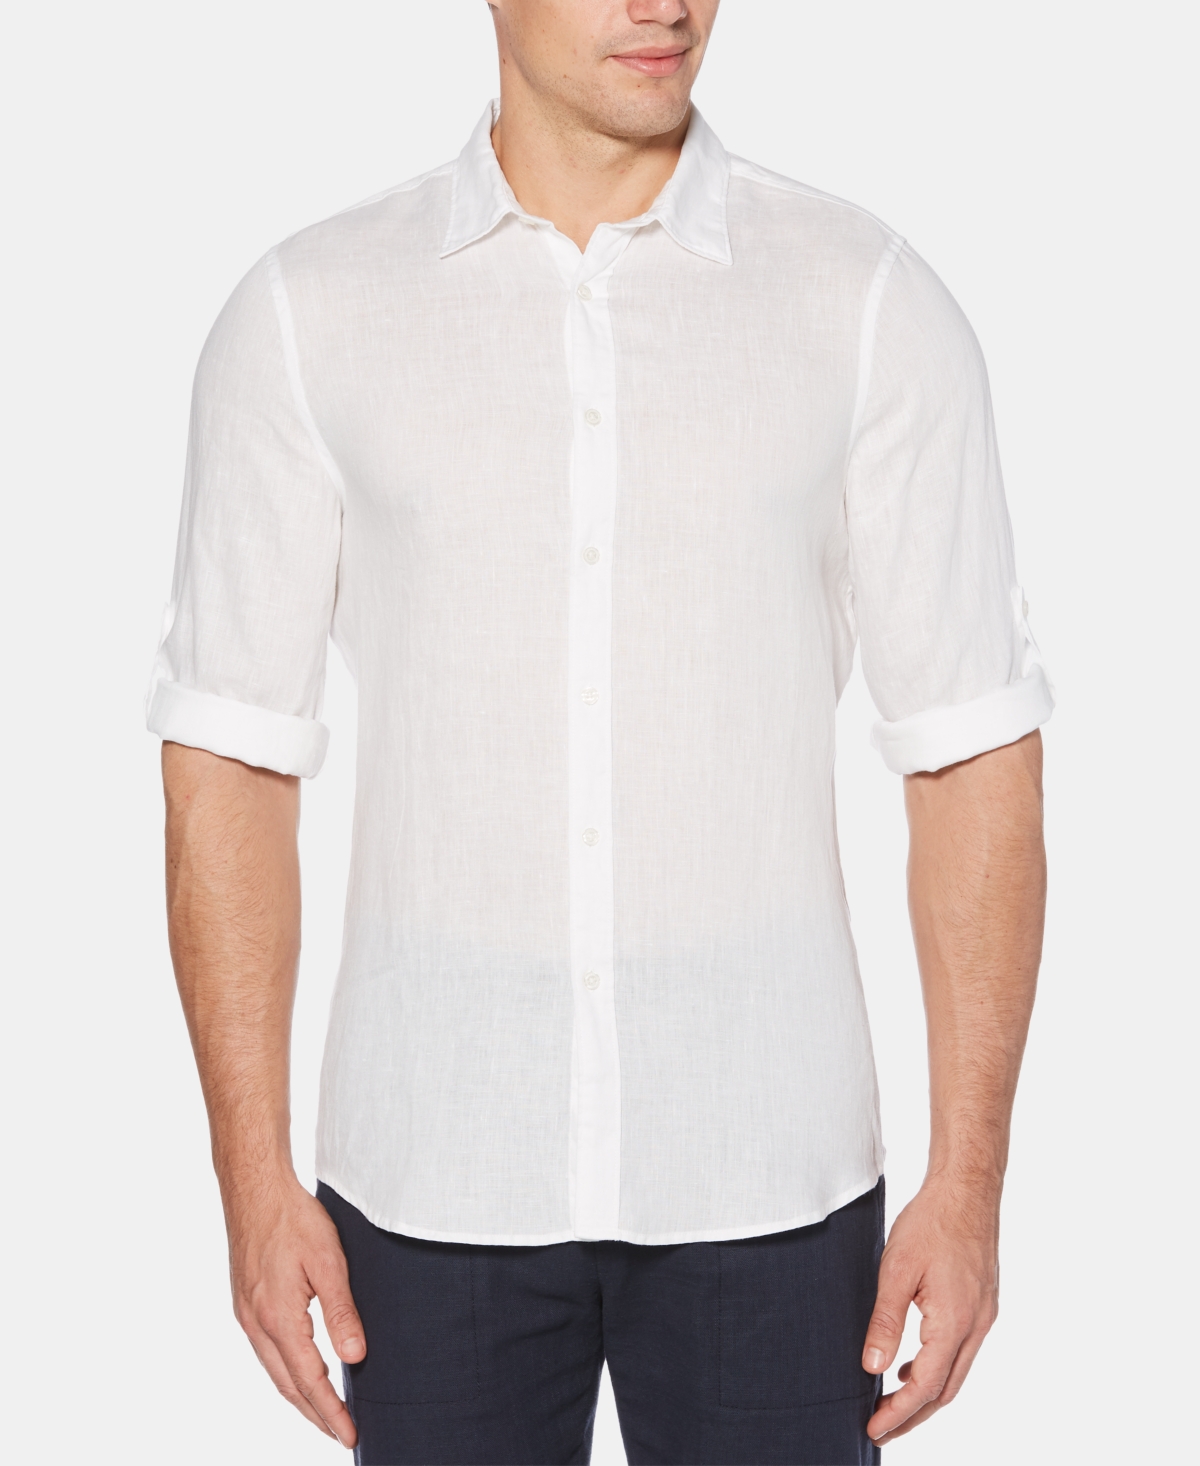 Men's Solid Linen Roll Sleeve Shirt - Delft